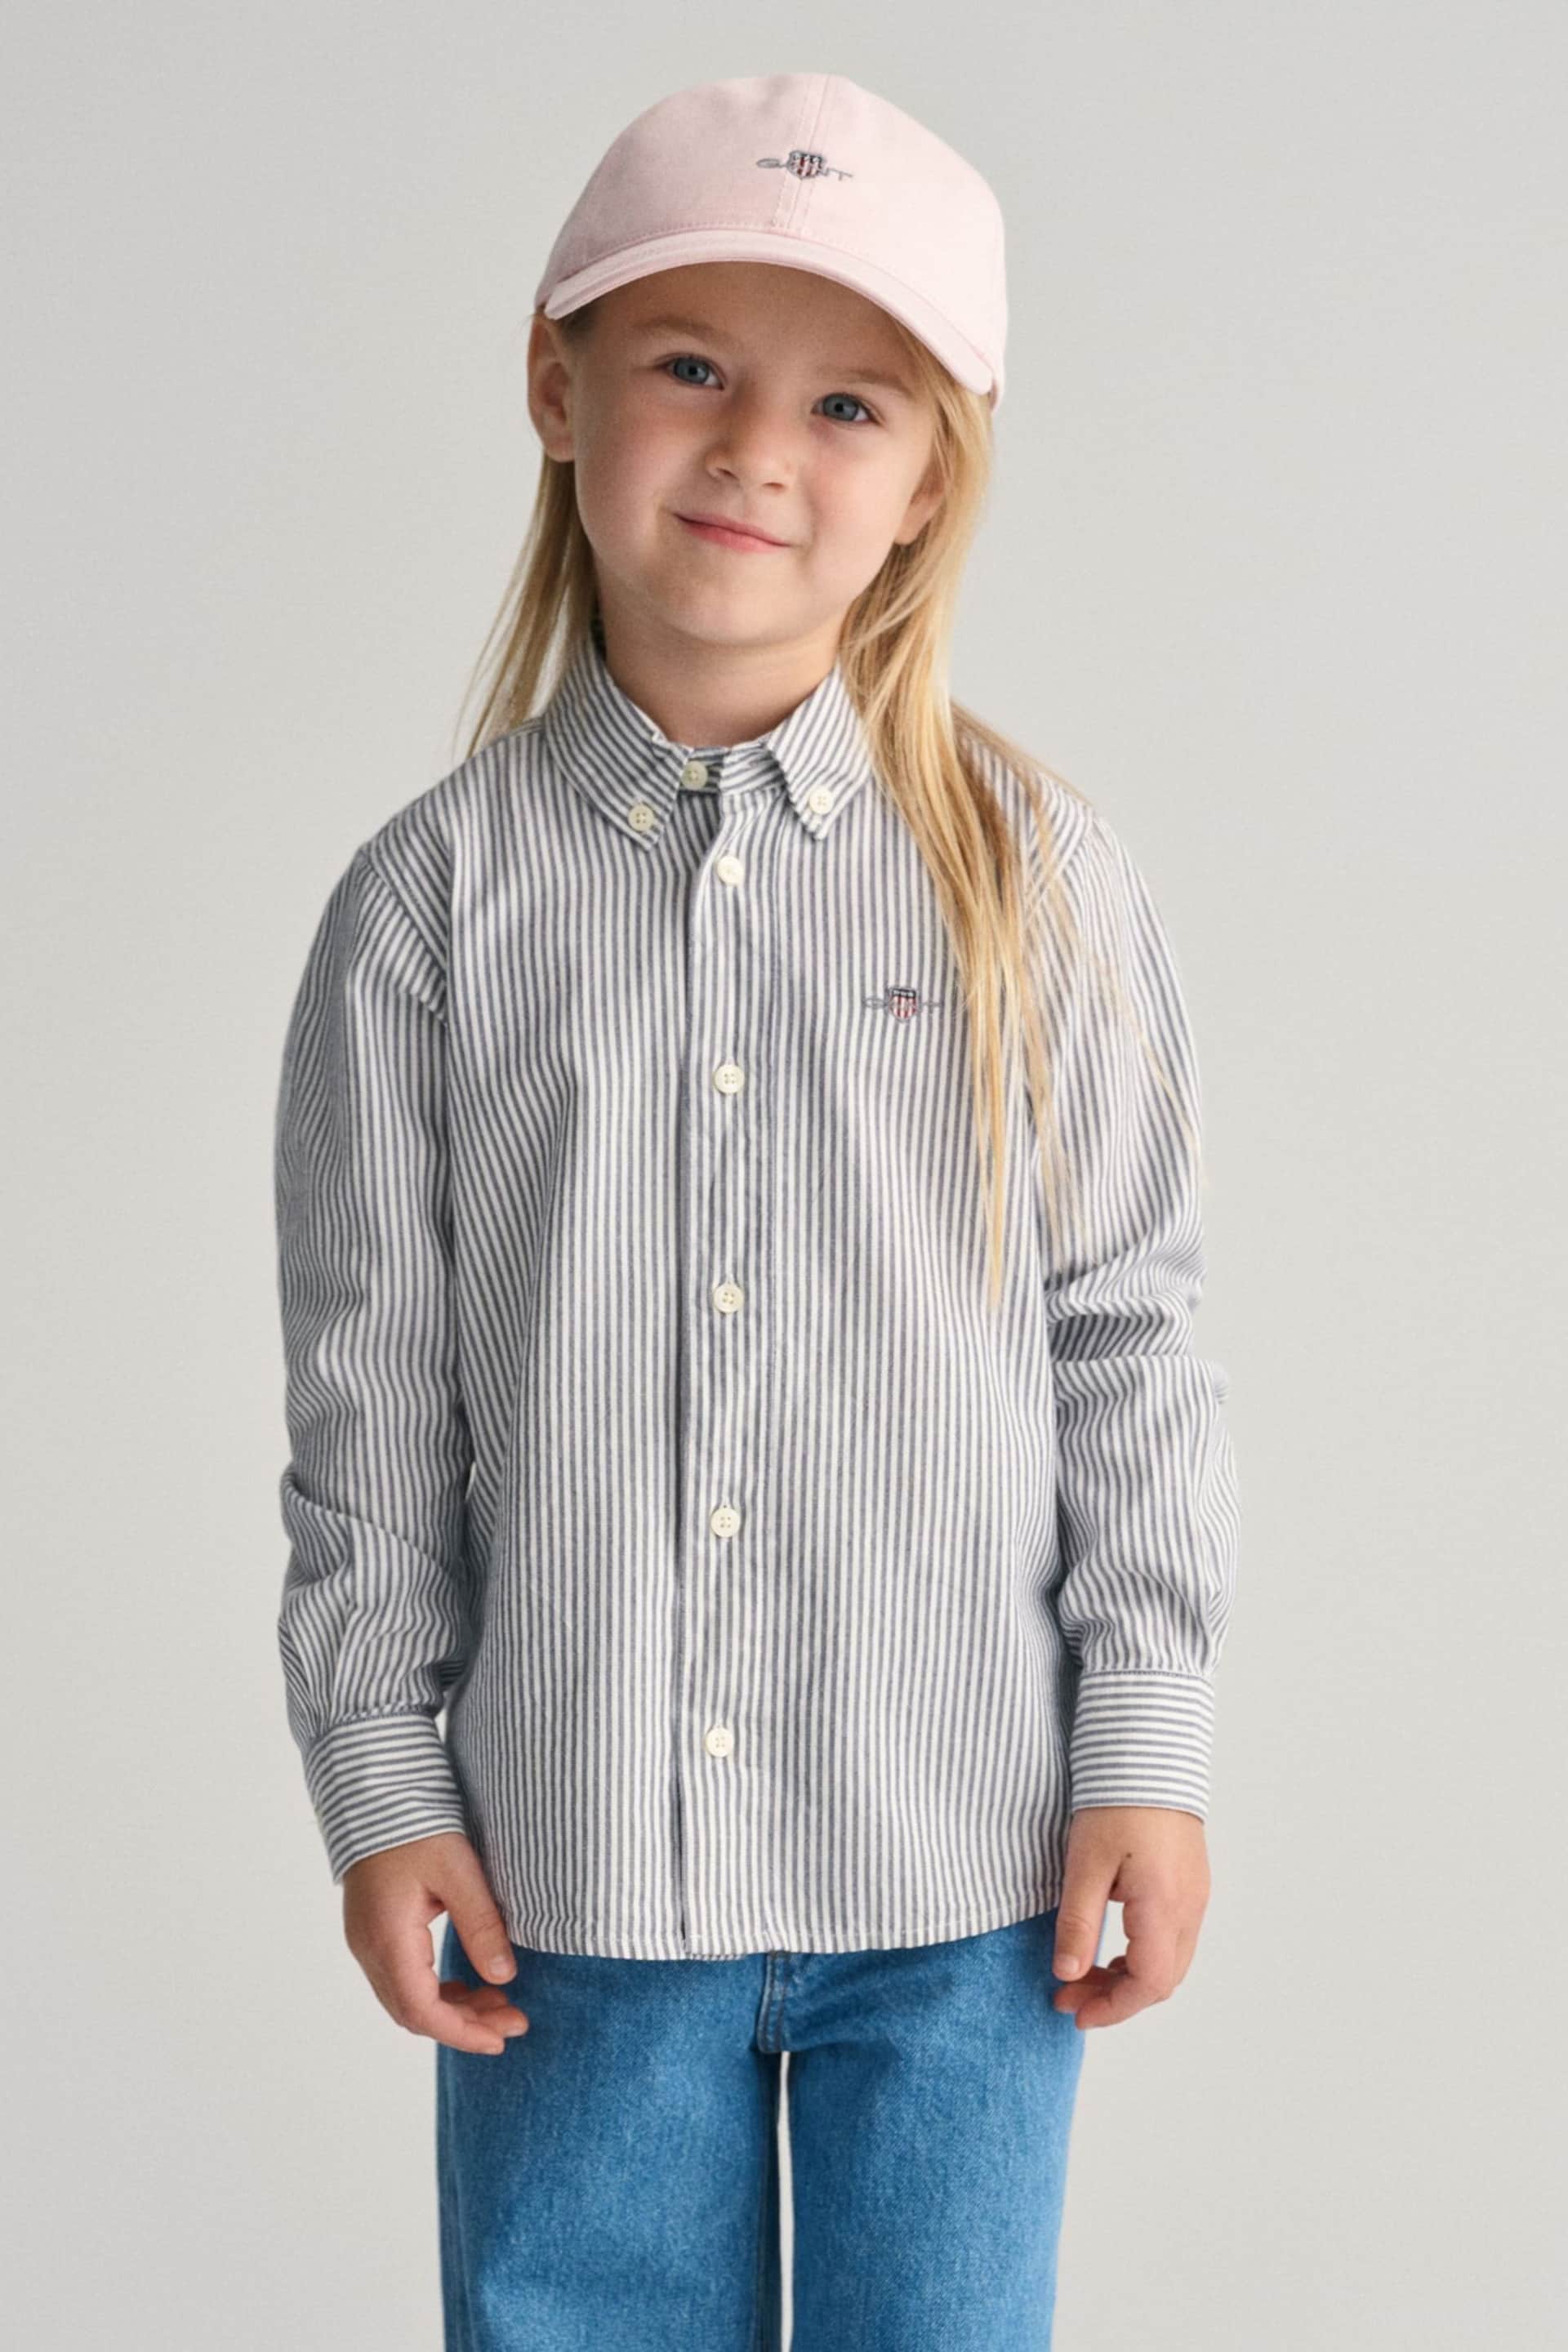 GANT Kids Shield Striped Oxford Shirt - Image 1 of 8